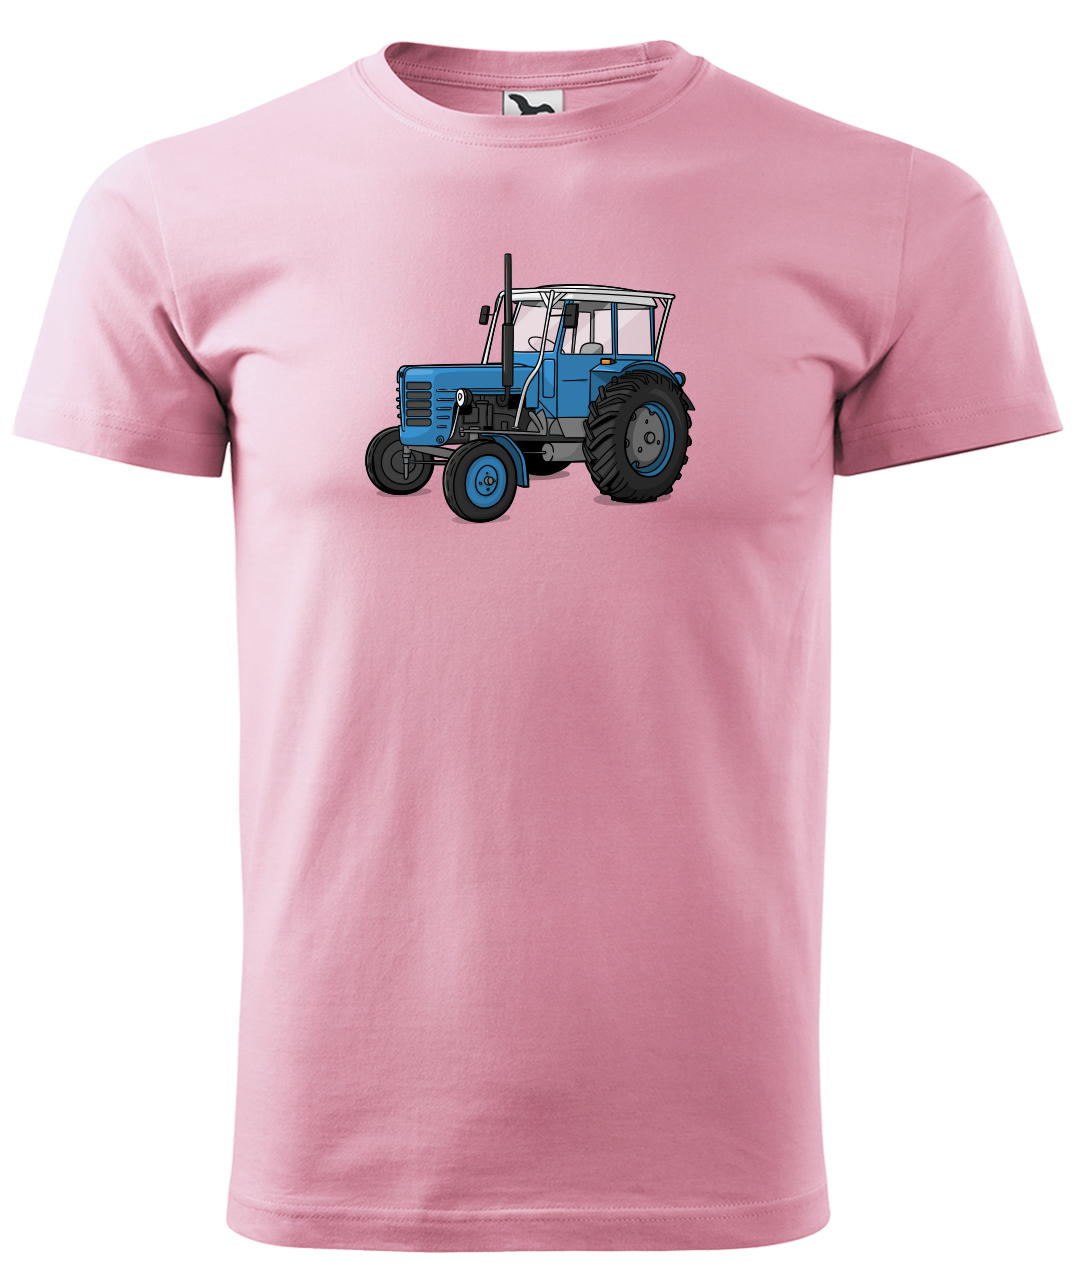 Dětské tričko s traktorem - Starý traktor Velikost: 4 roky / 110 cm, Barva: Růžová (30)